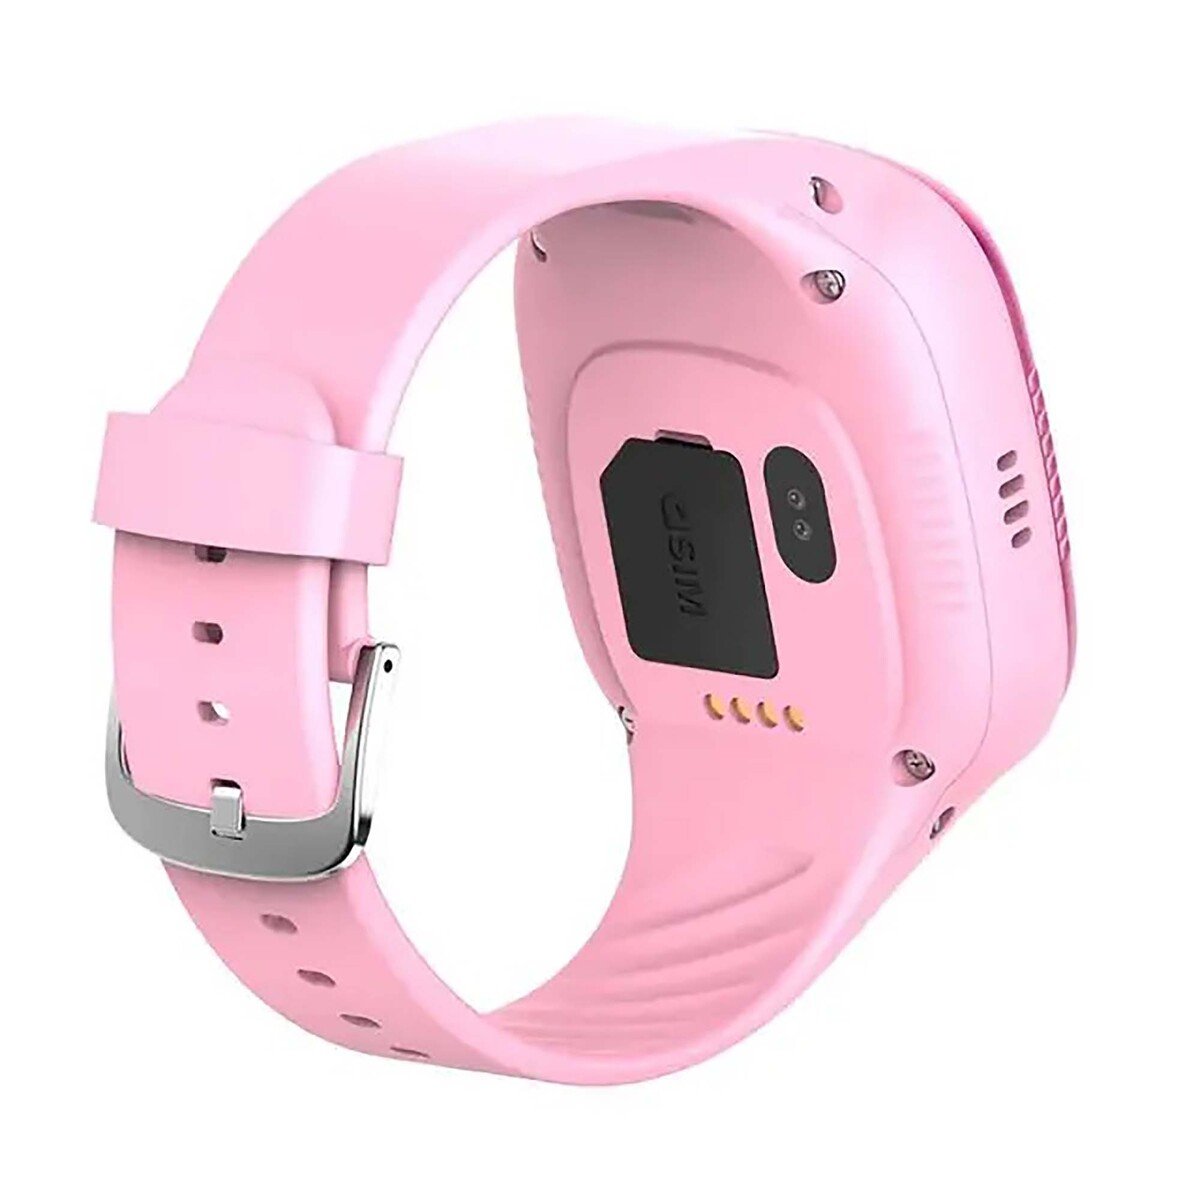 Porodo Kids 4G Smart Watch With Video Calling 2MP -- Pink (PD-K4GW)